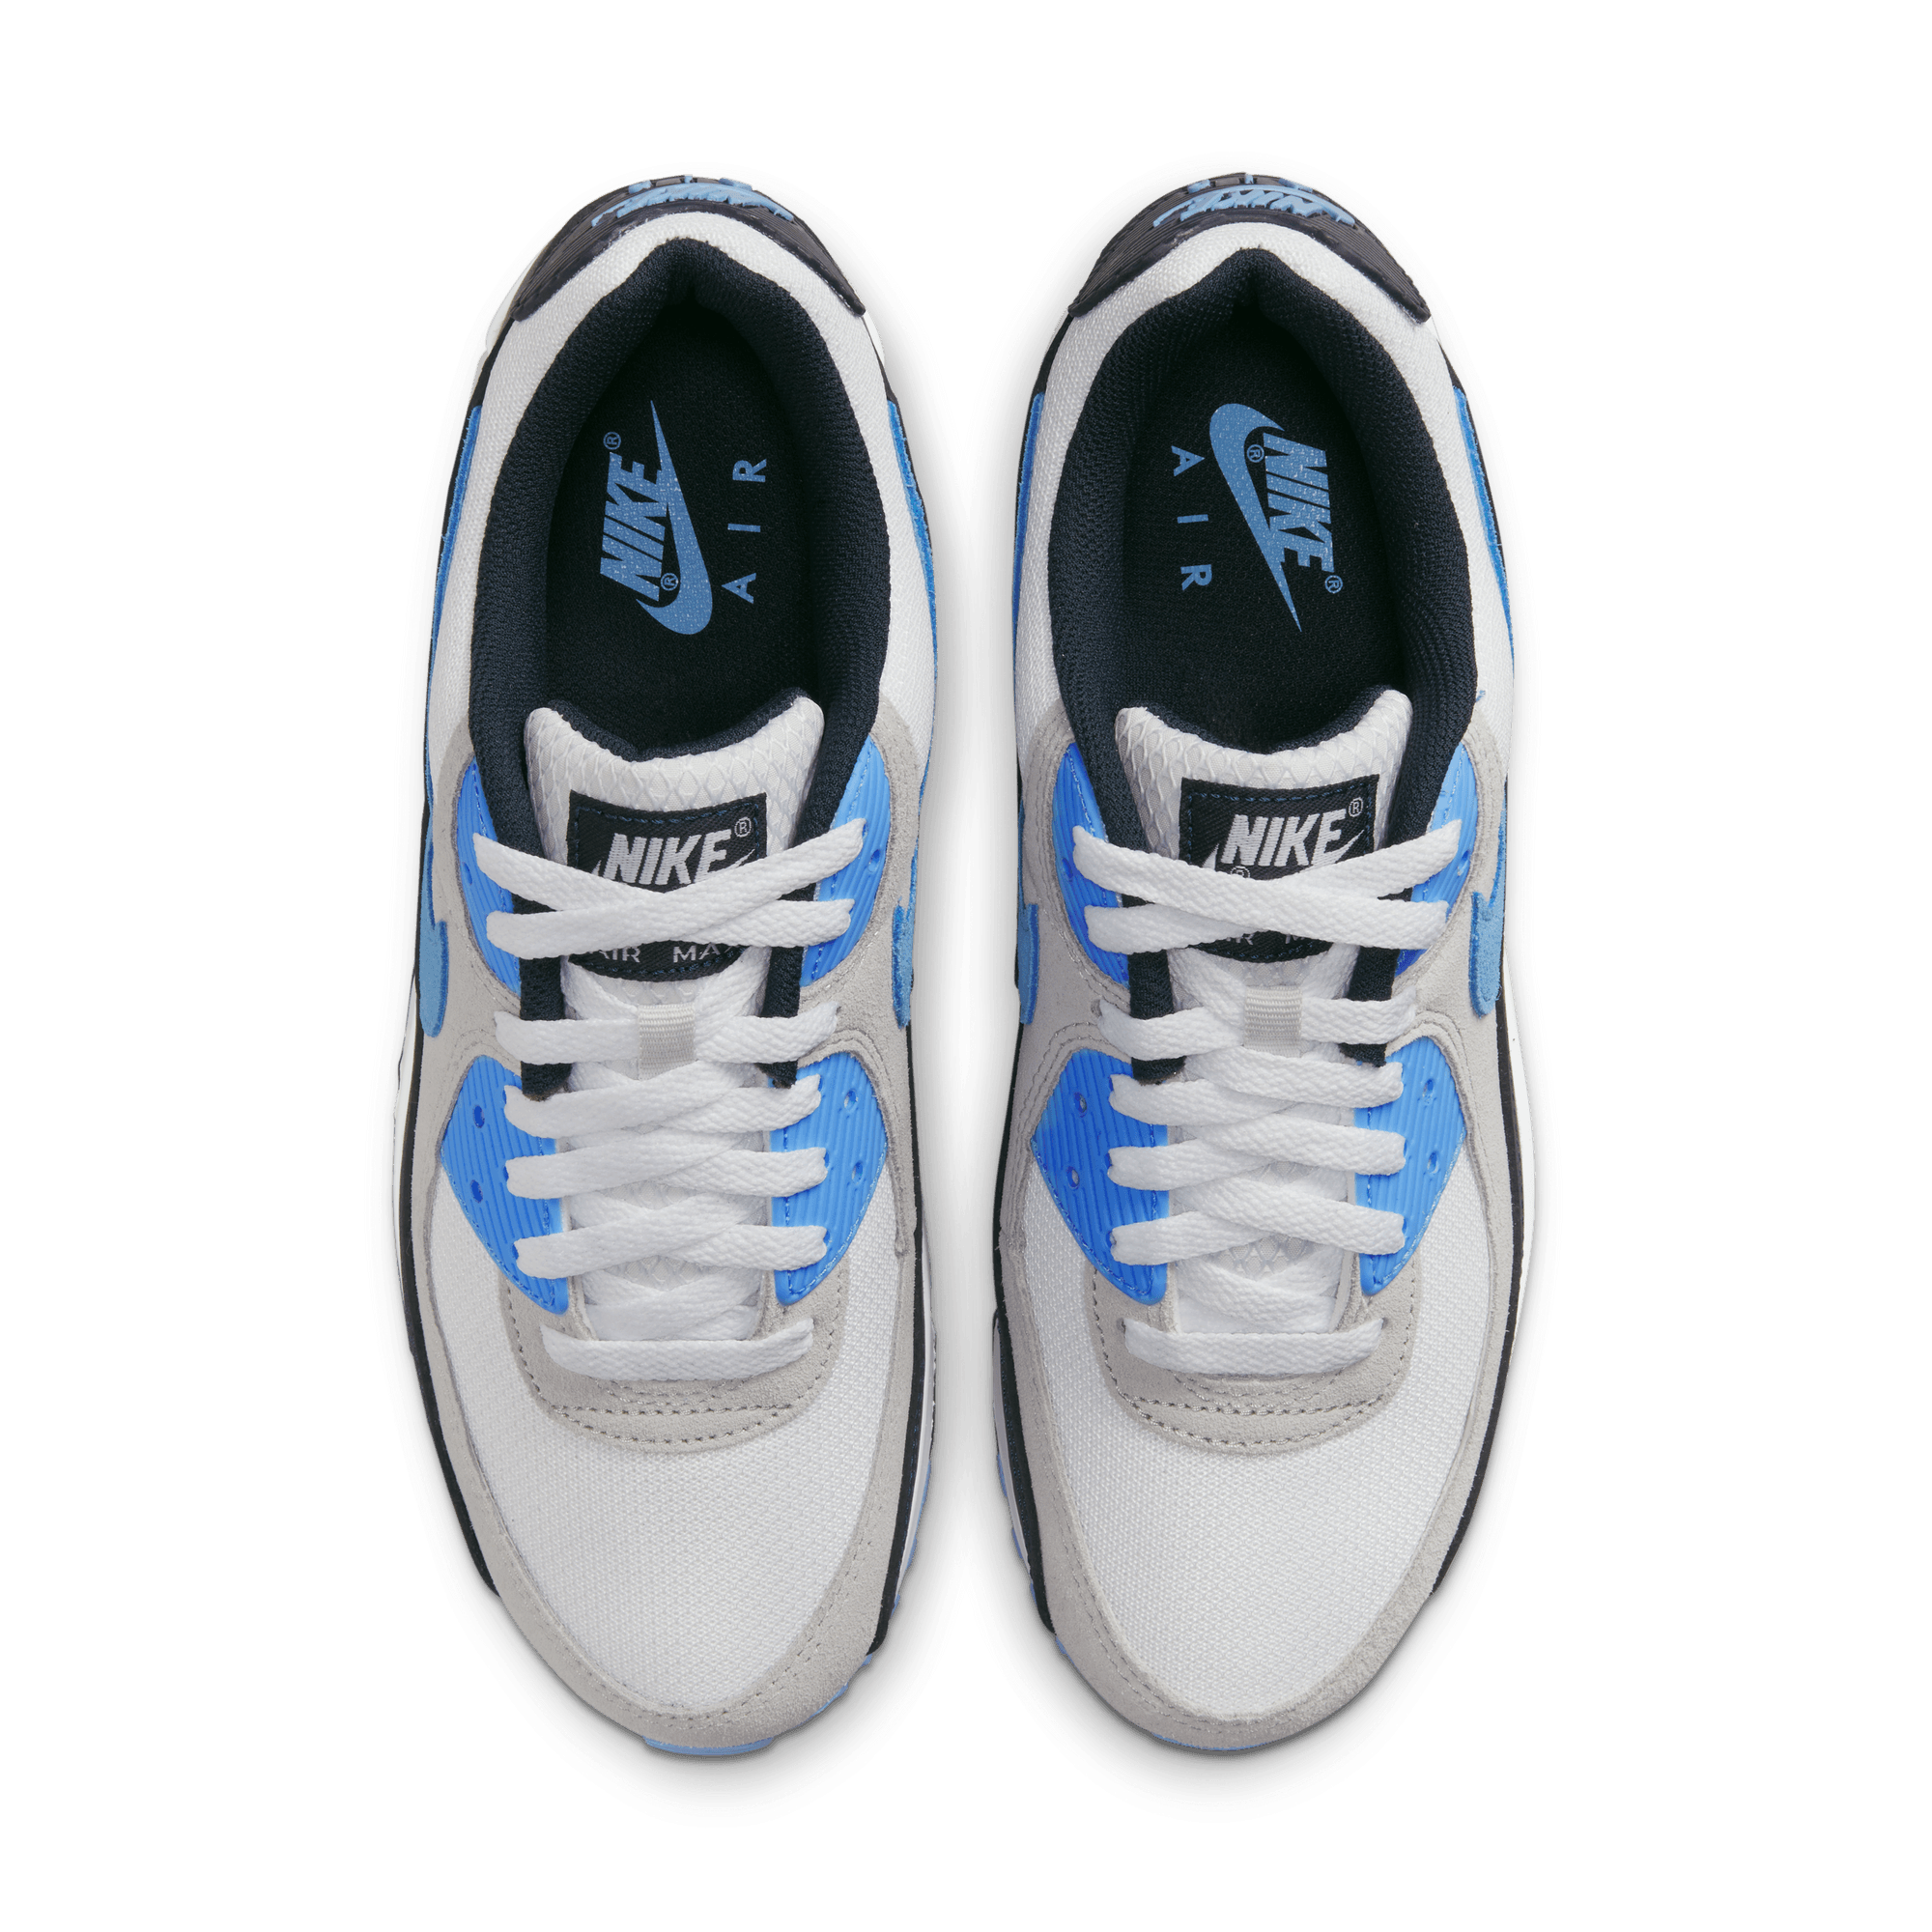 Nike Men's Air Max 90 Shoes, Size 8, White/University Blue